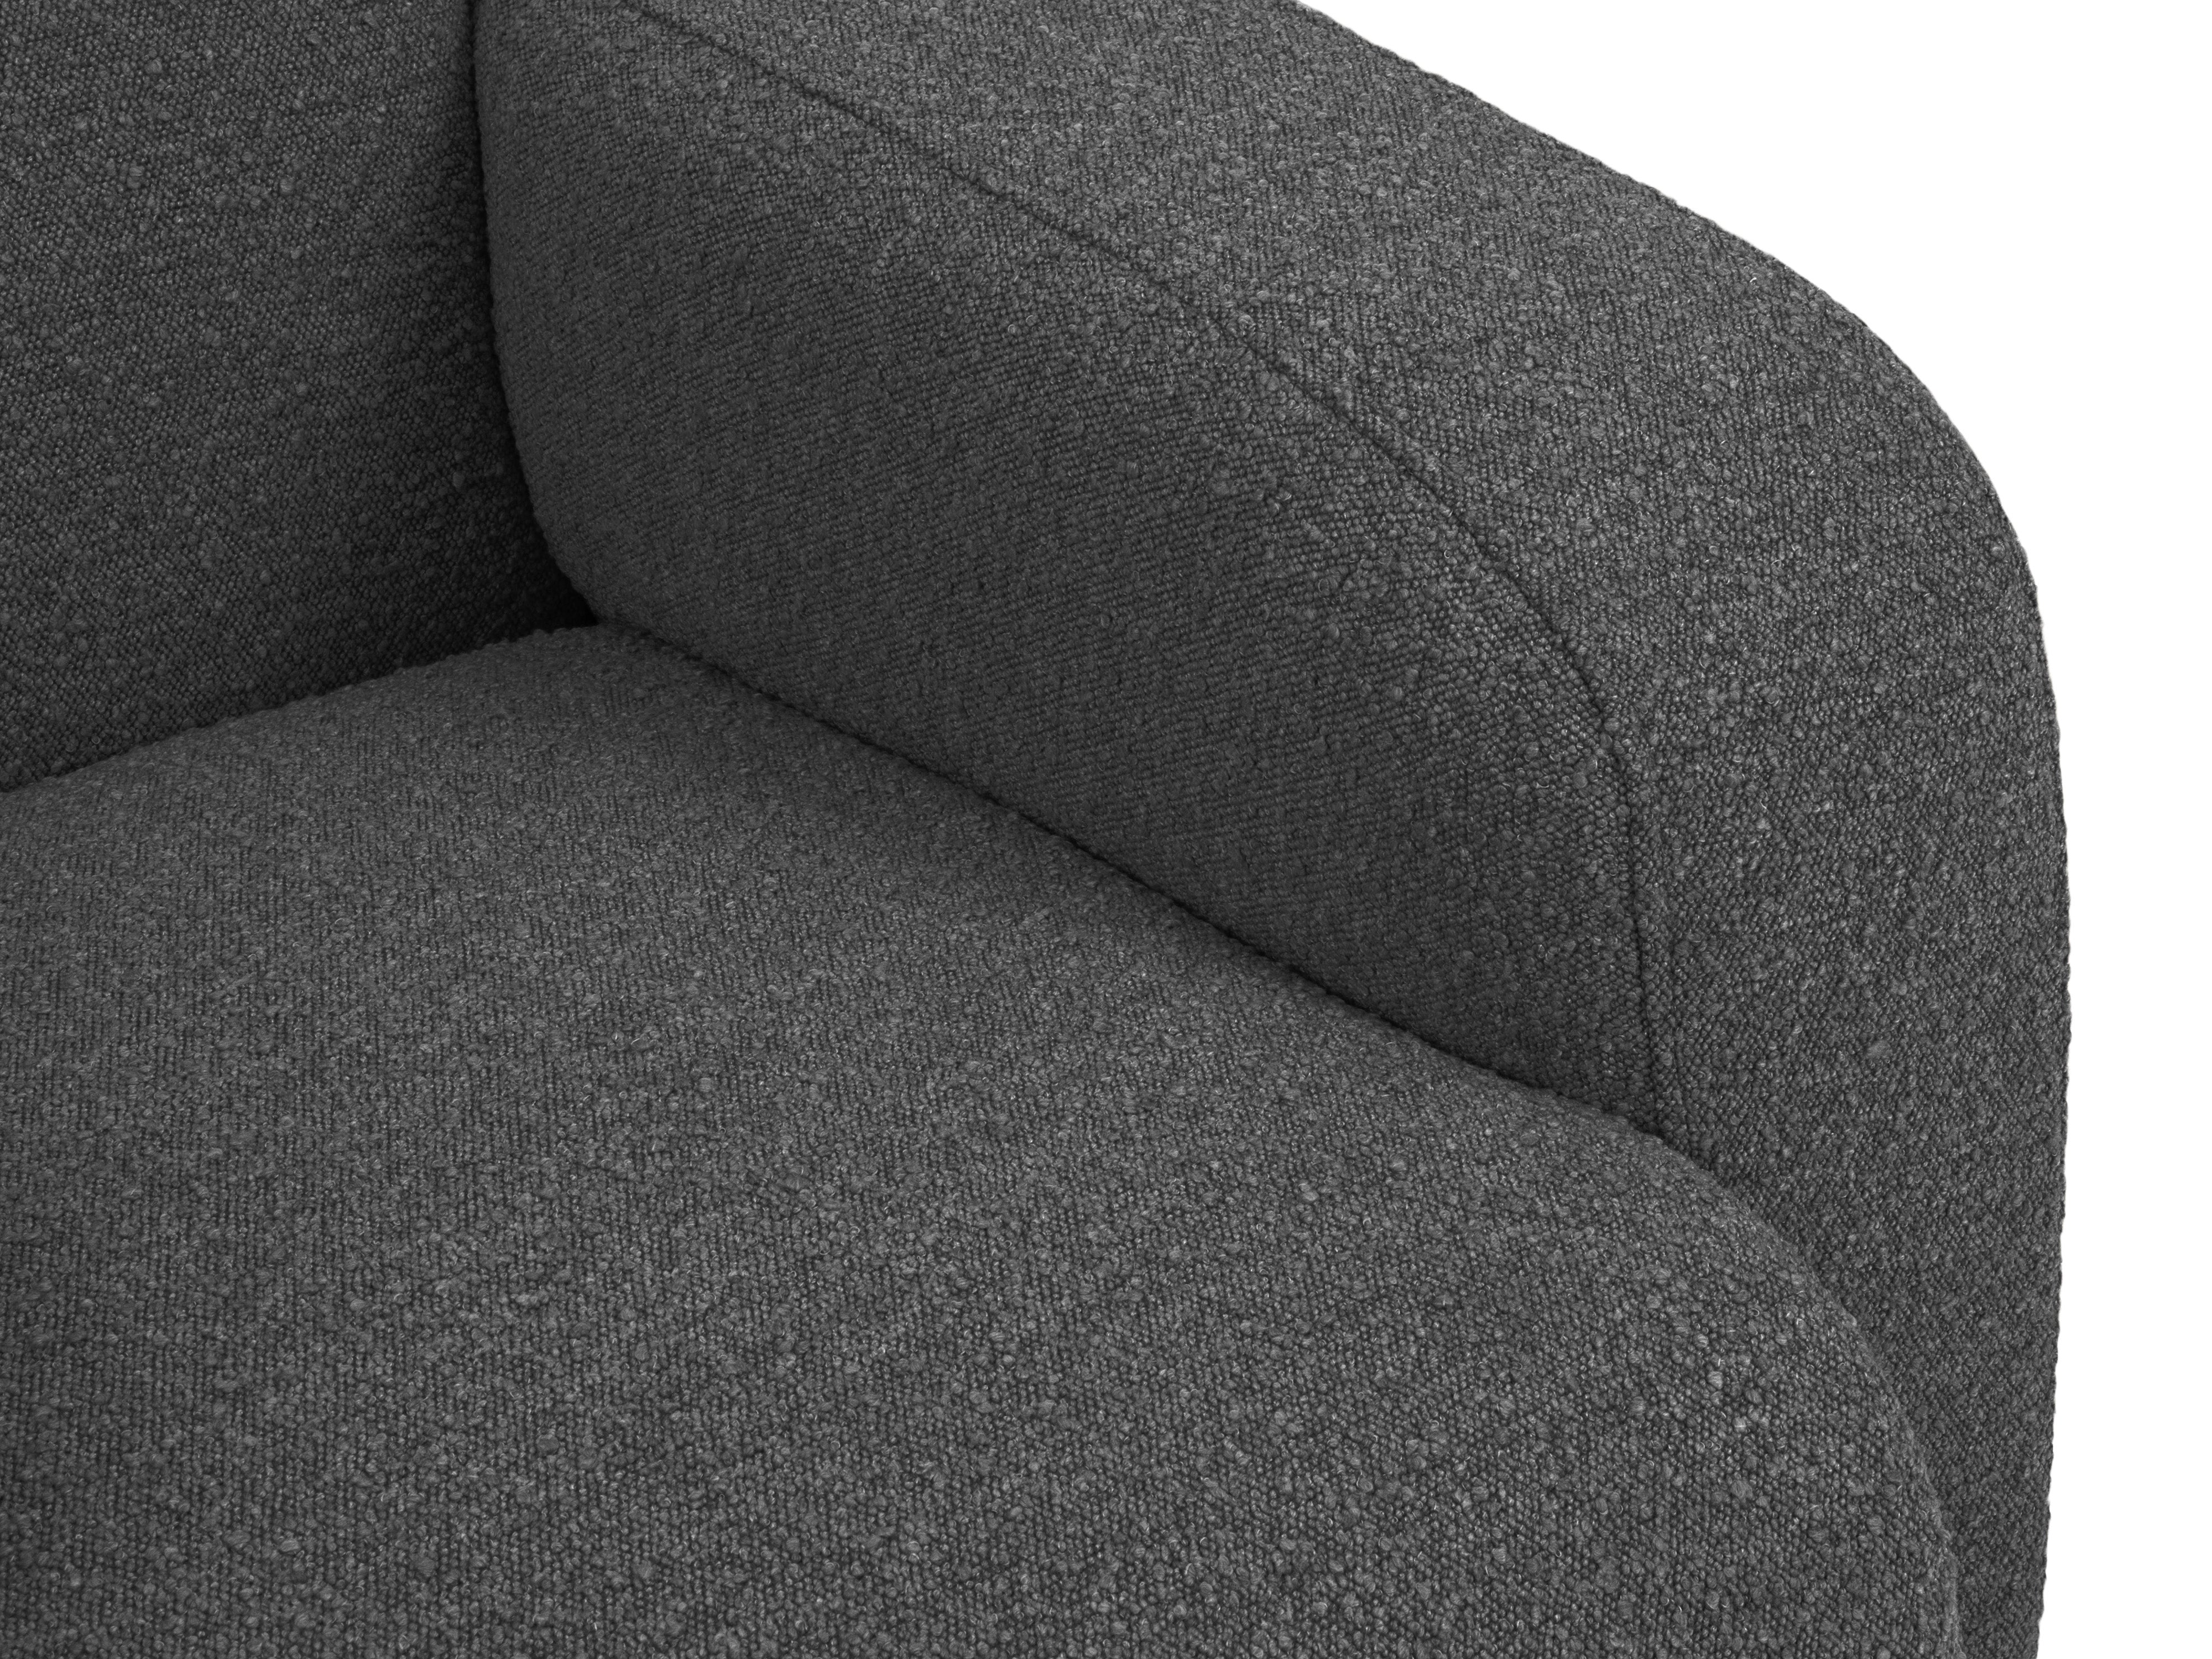 Armchair in boucle fabric MOLINO dark grey